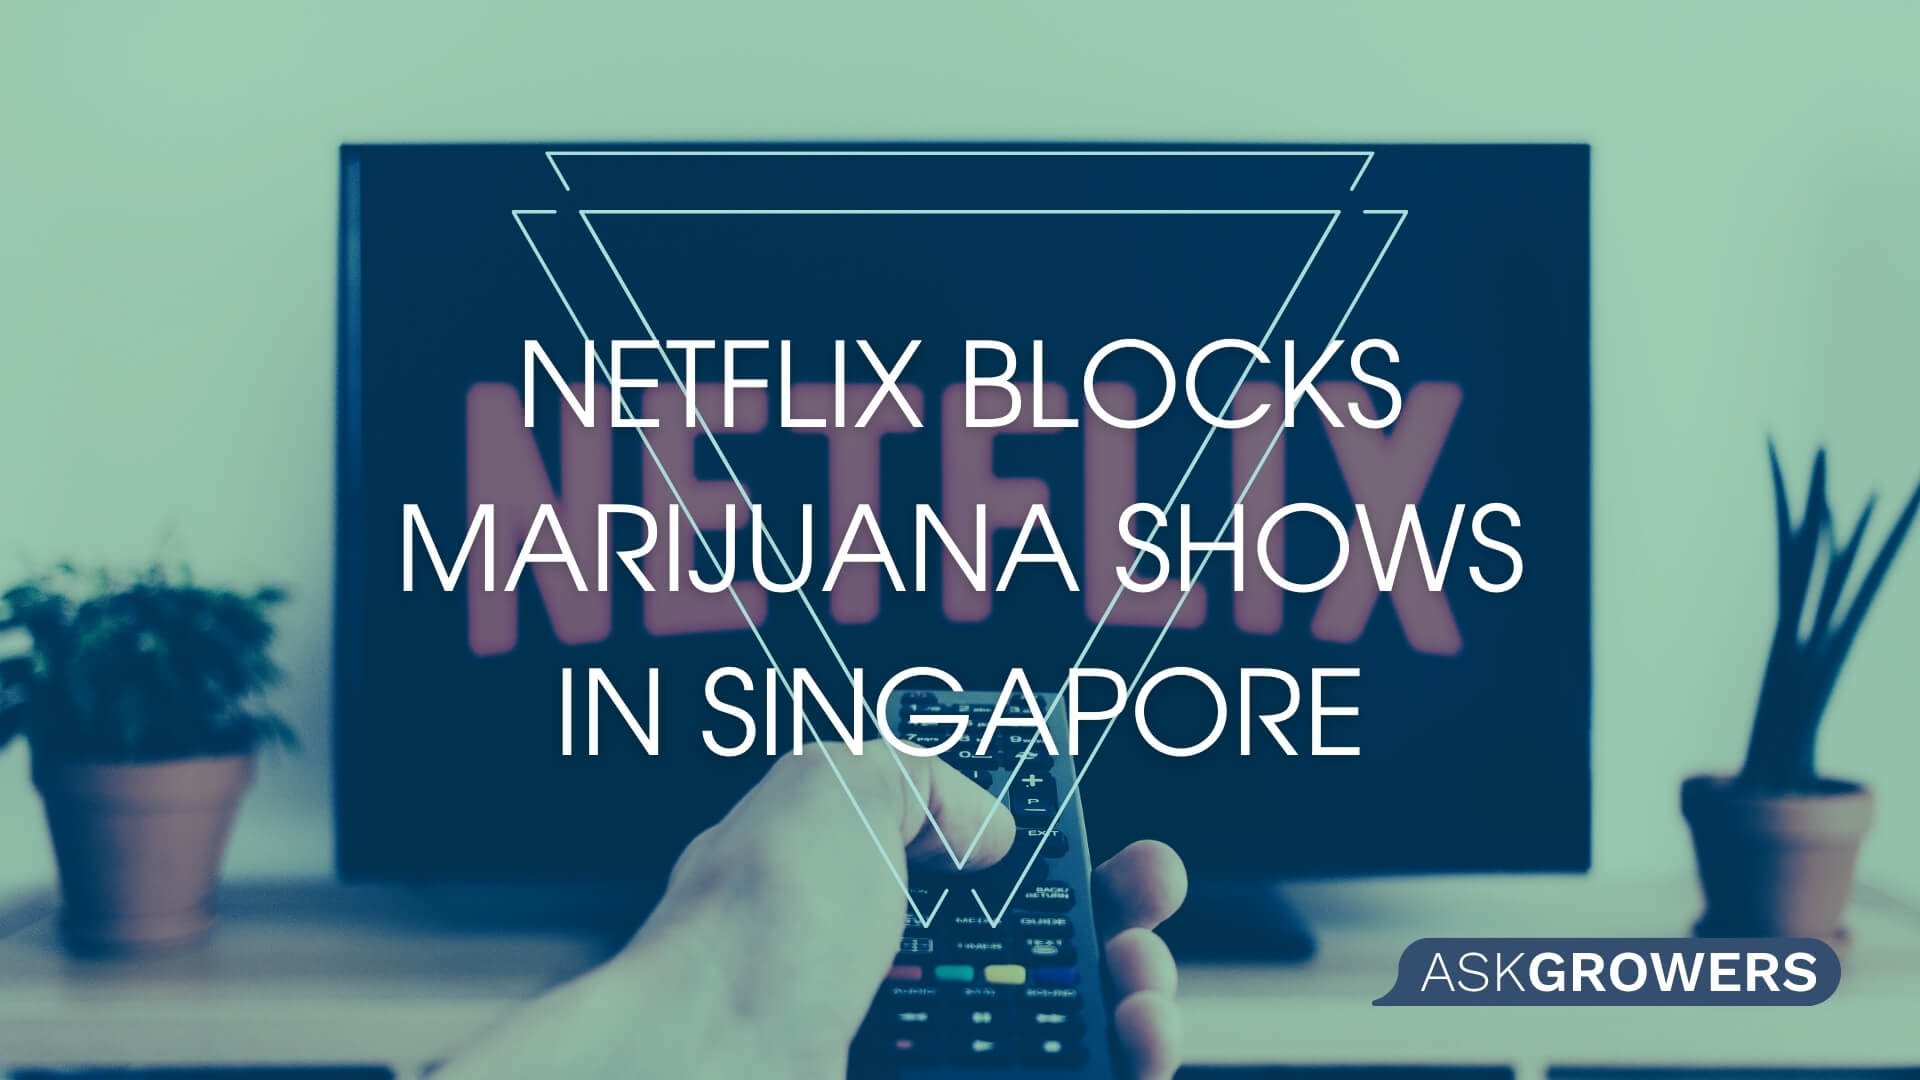 Netflix Blocks Marijuana Shows in Singapore in Response to Government Demands